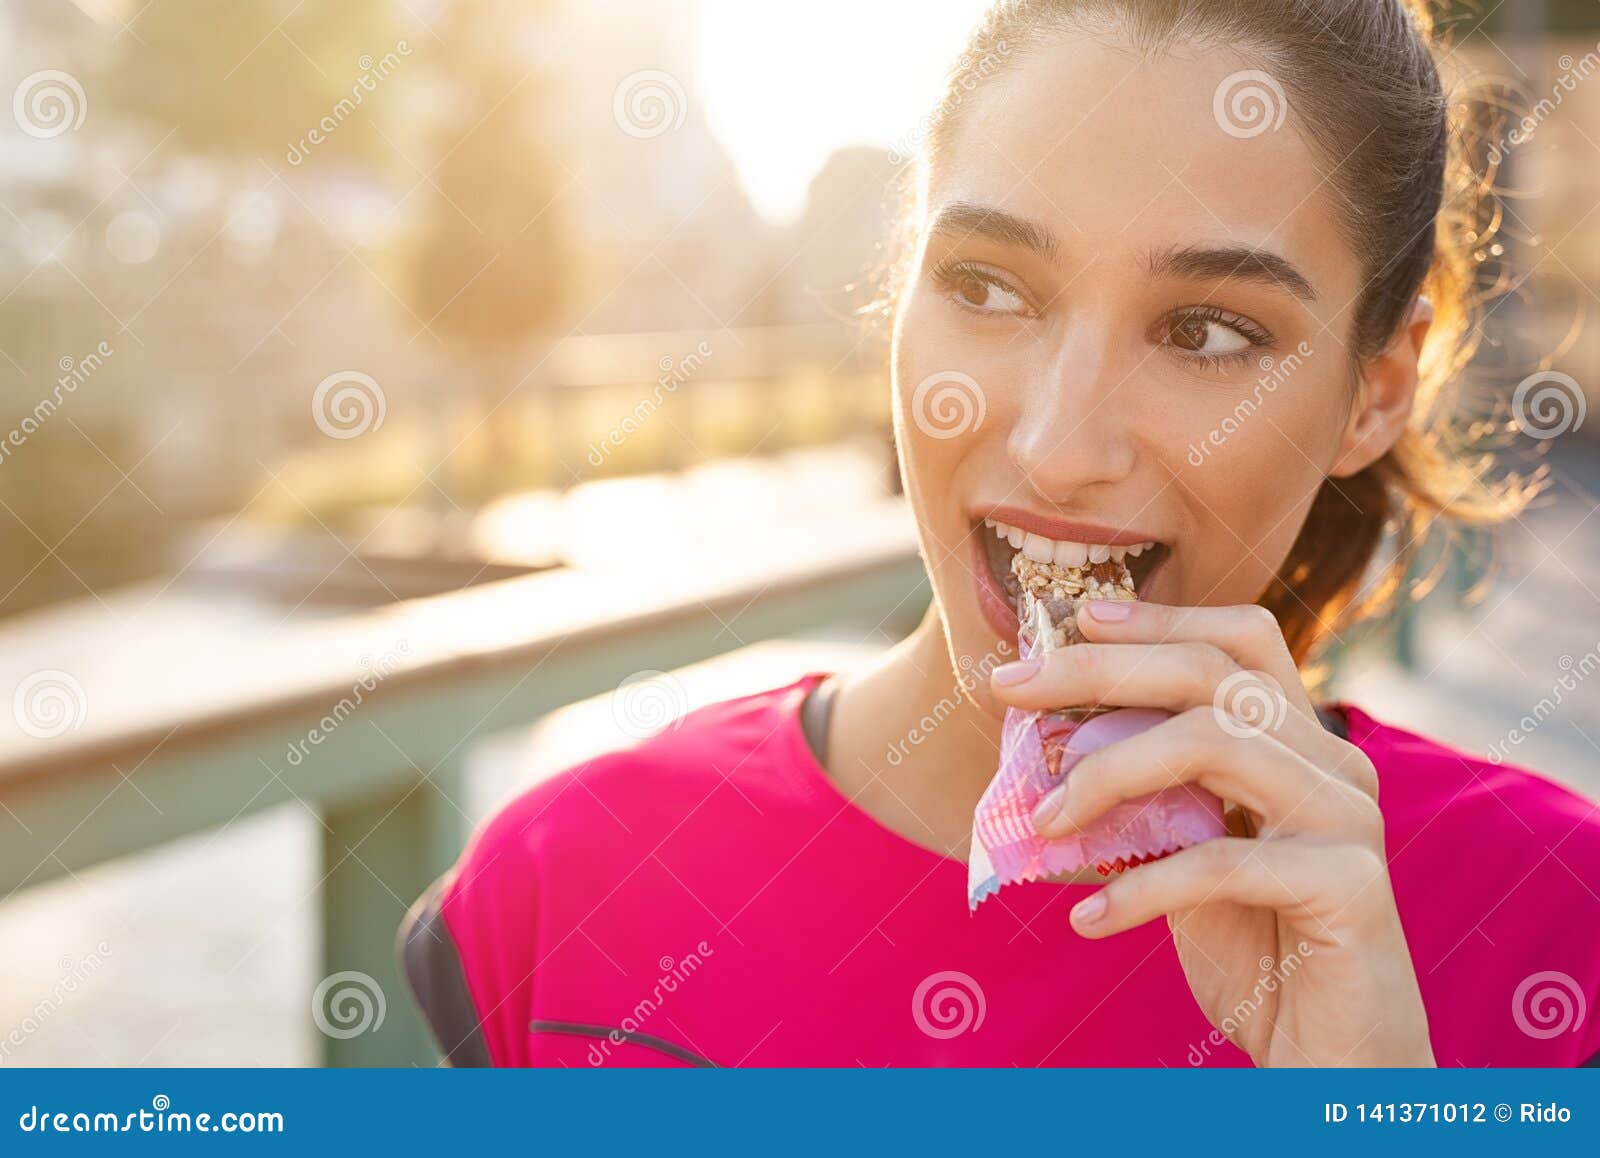 sporty woman eating energy bar